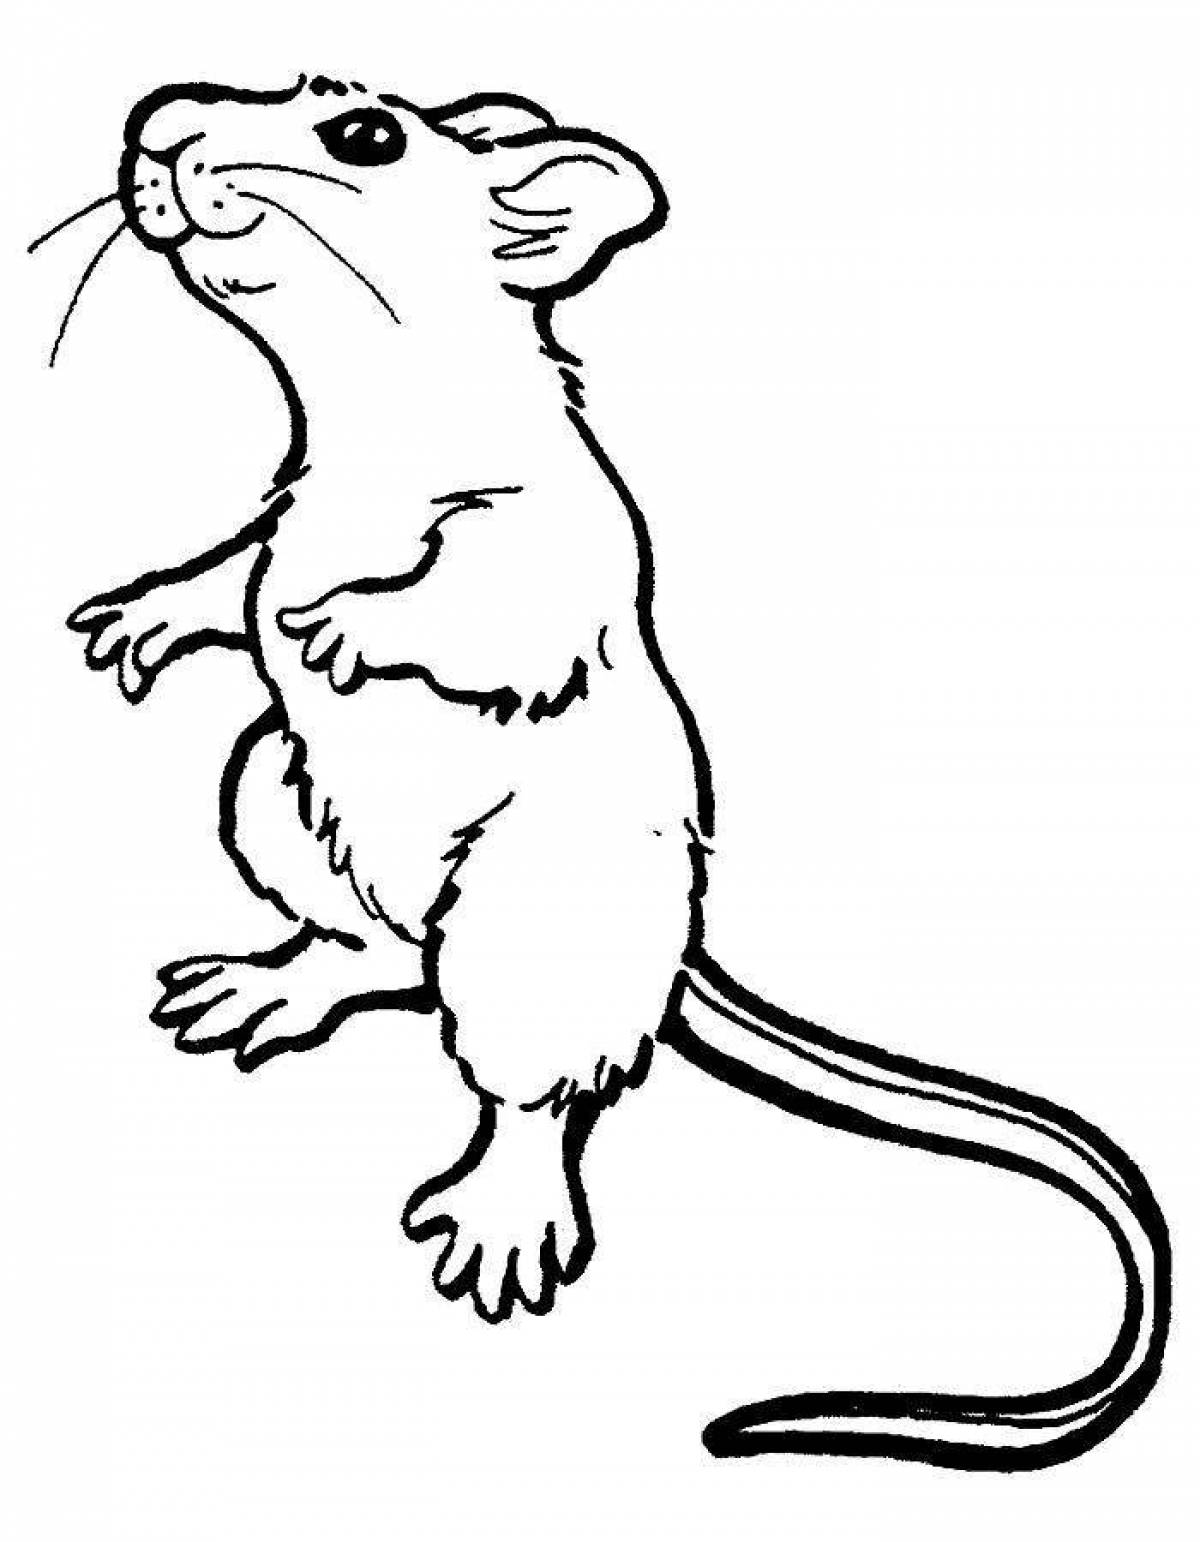 Раскраска мышь распечатать. Раскраска мышка. Раскраска мышонок. Мышь раскраска для детей. Крыса раскраска.